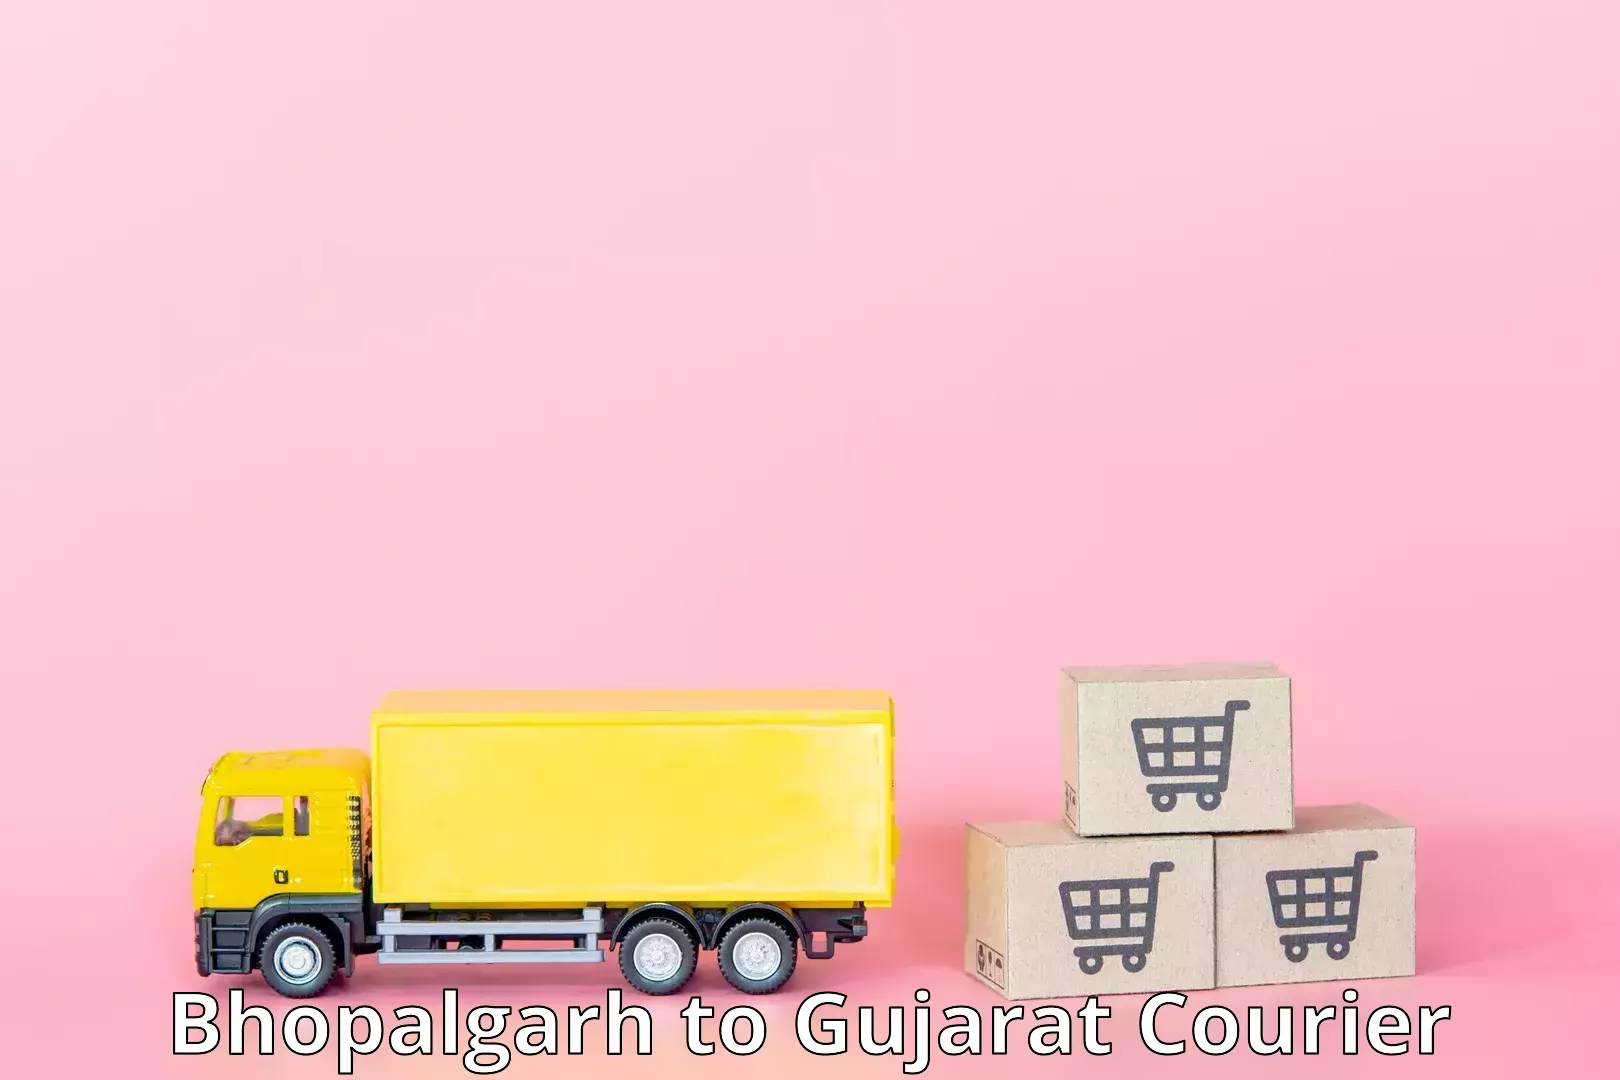 Tech-enabled shipping Bhopalgarh to Ankleshwar